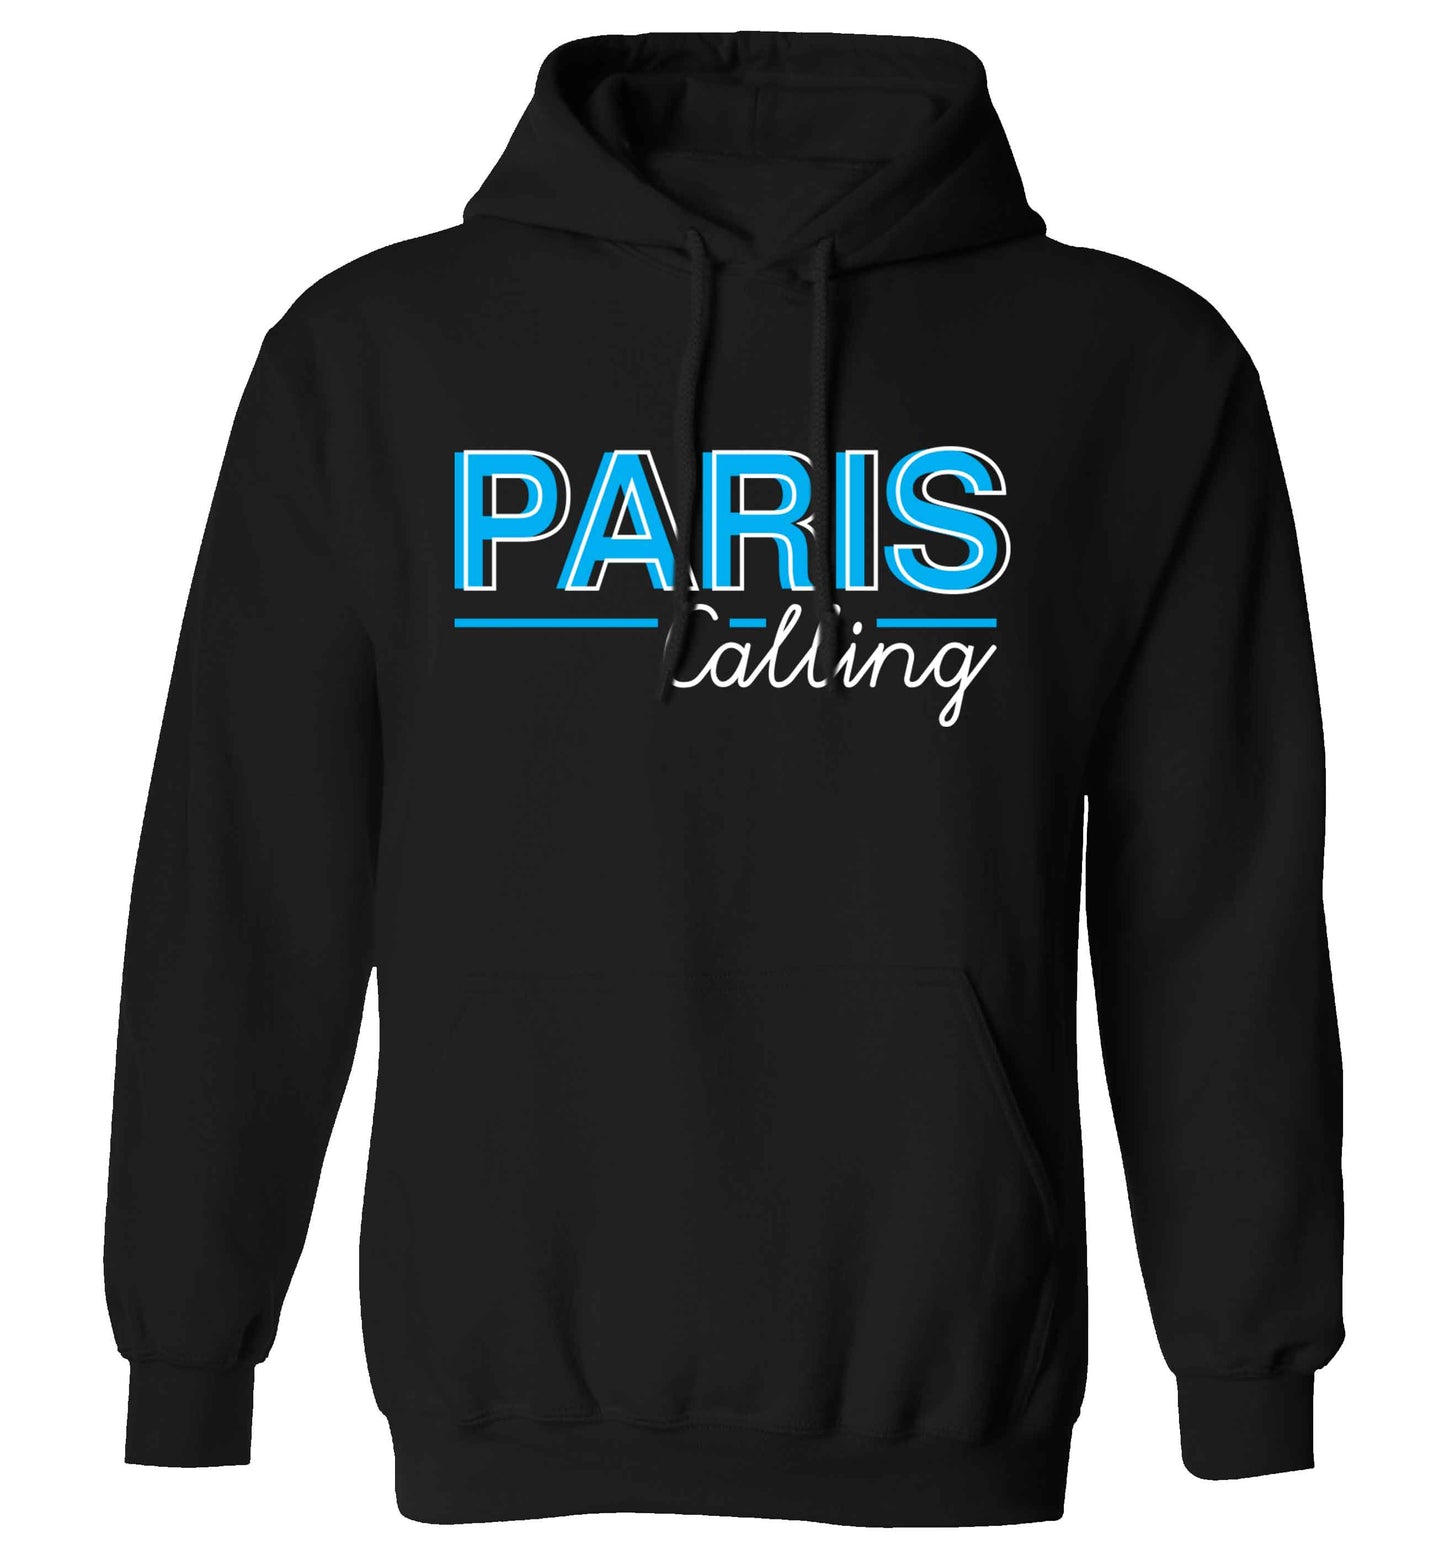 Paris calling adults unisex black hoodie 2XL